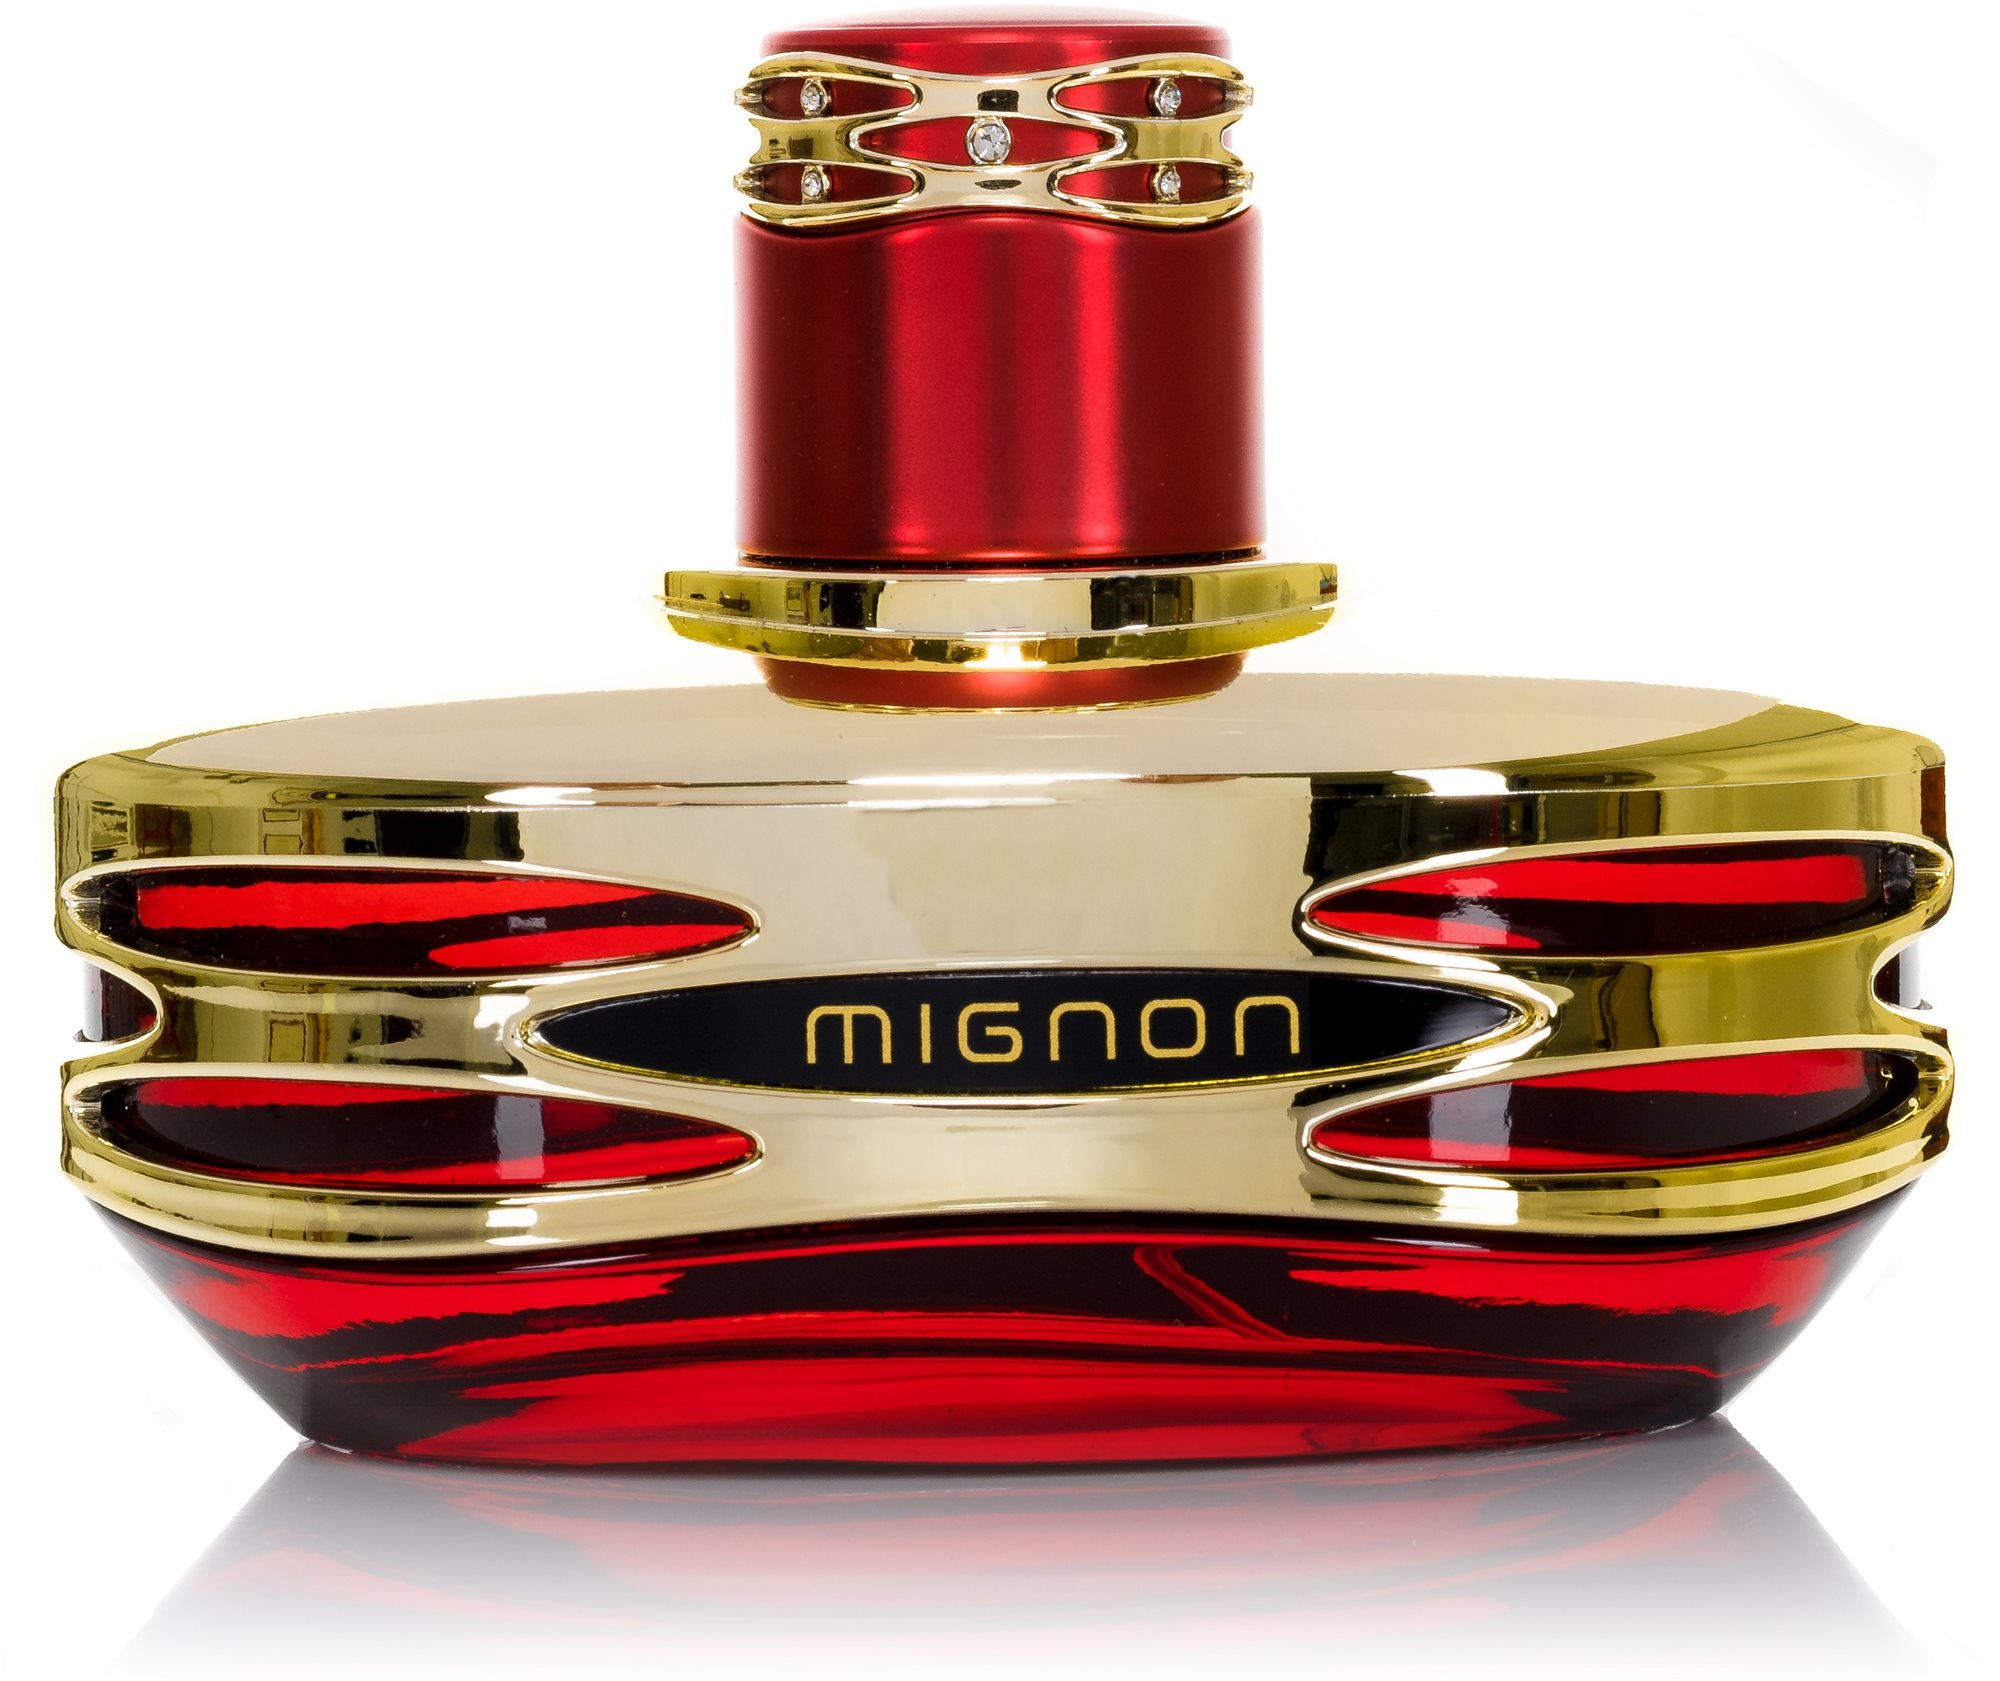 Armaf Mignon Eau de Parfum hölgyeknek 100 ml